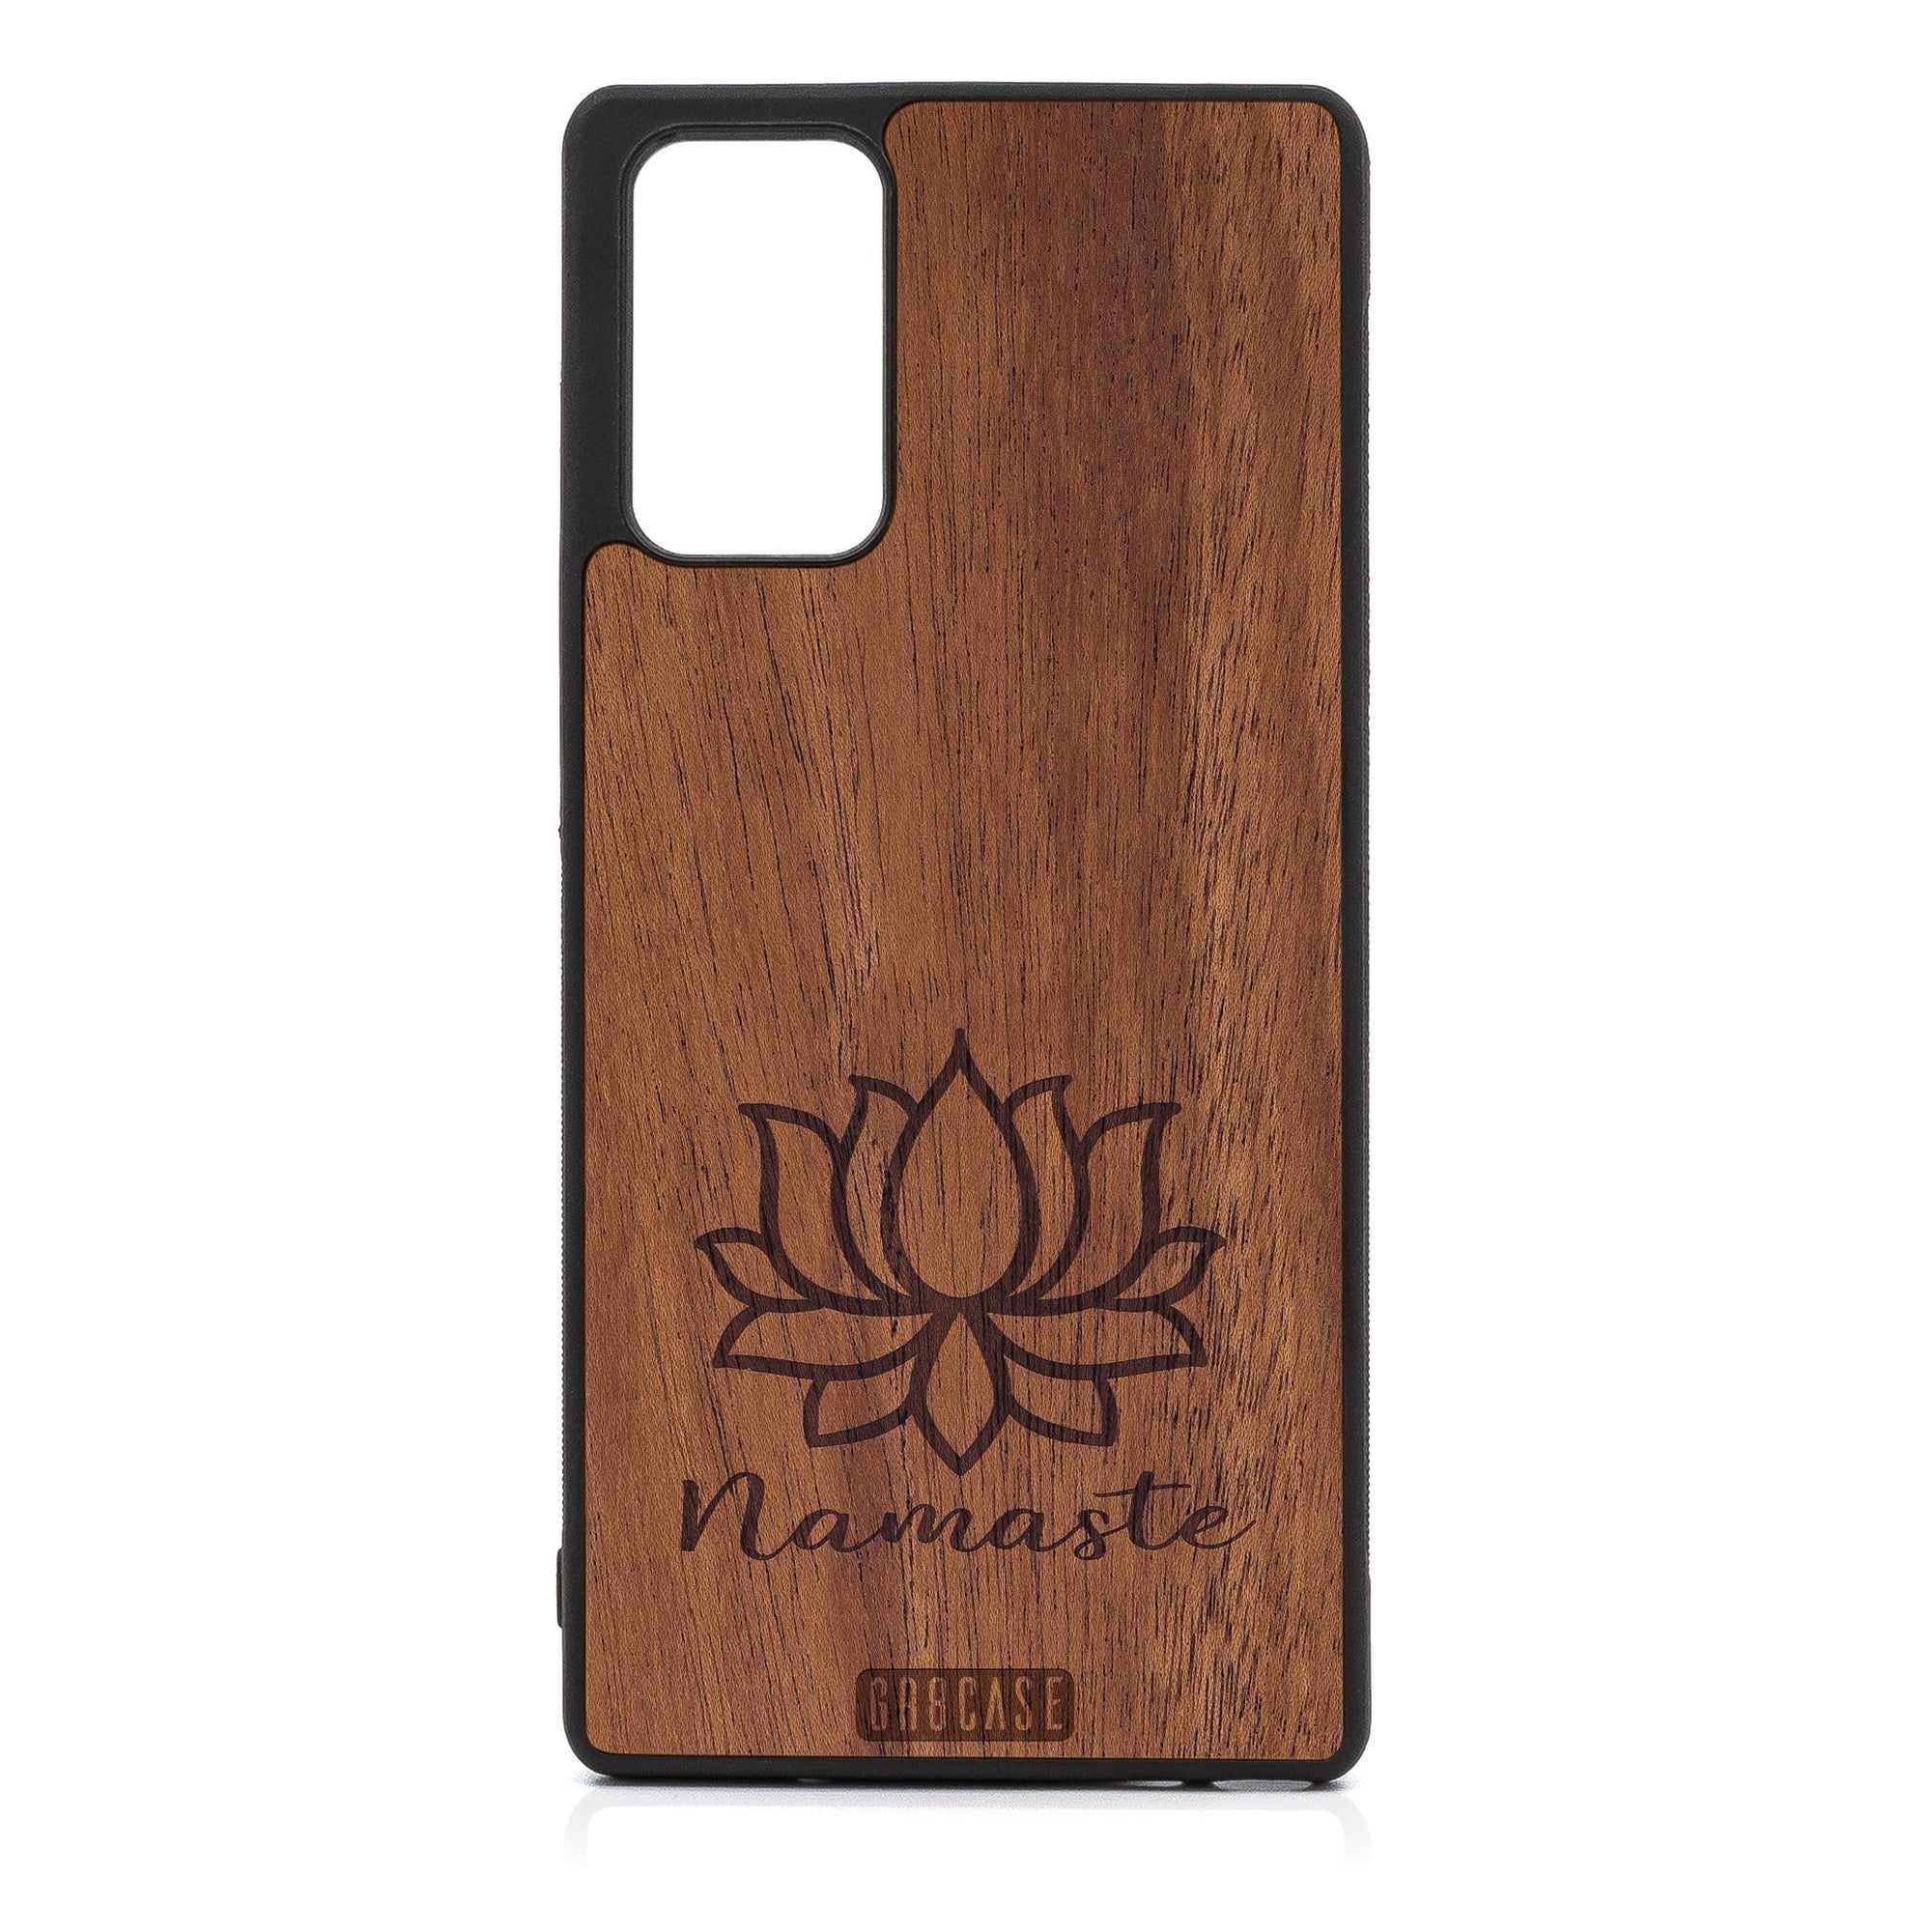 Namaste (Lotus Flower) Design Wood Case For Samsung Galaxy A73 5G